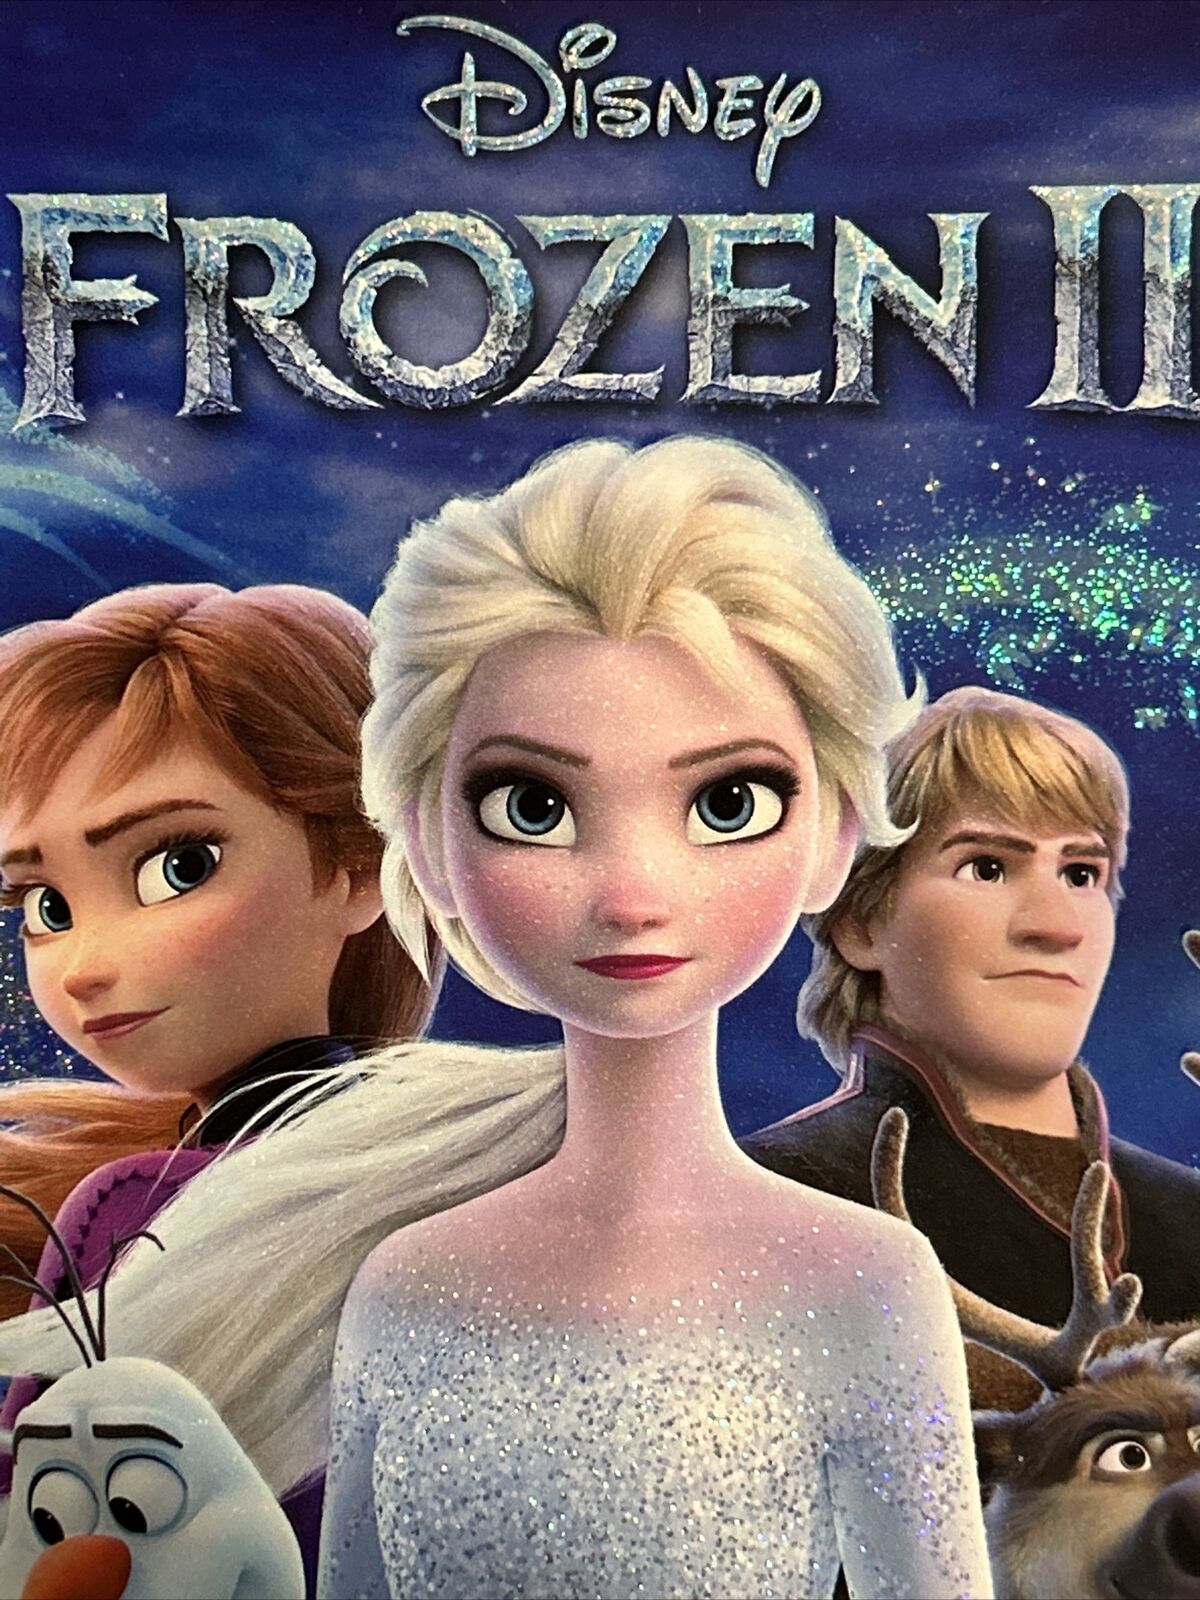 Brutaal jeugd Afdeling Frozen II (Blu-ray + DVD + DIGITAL CODE 2019). **BRAND NEW / SEALED **  786936863260 | eBay